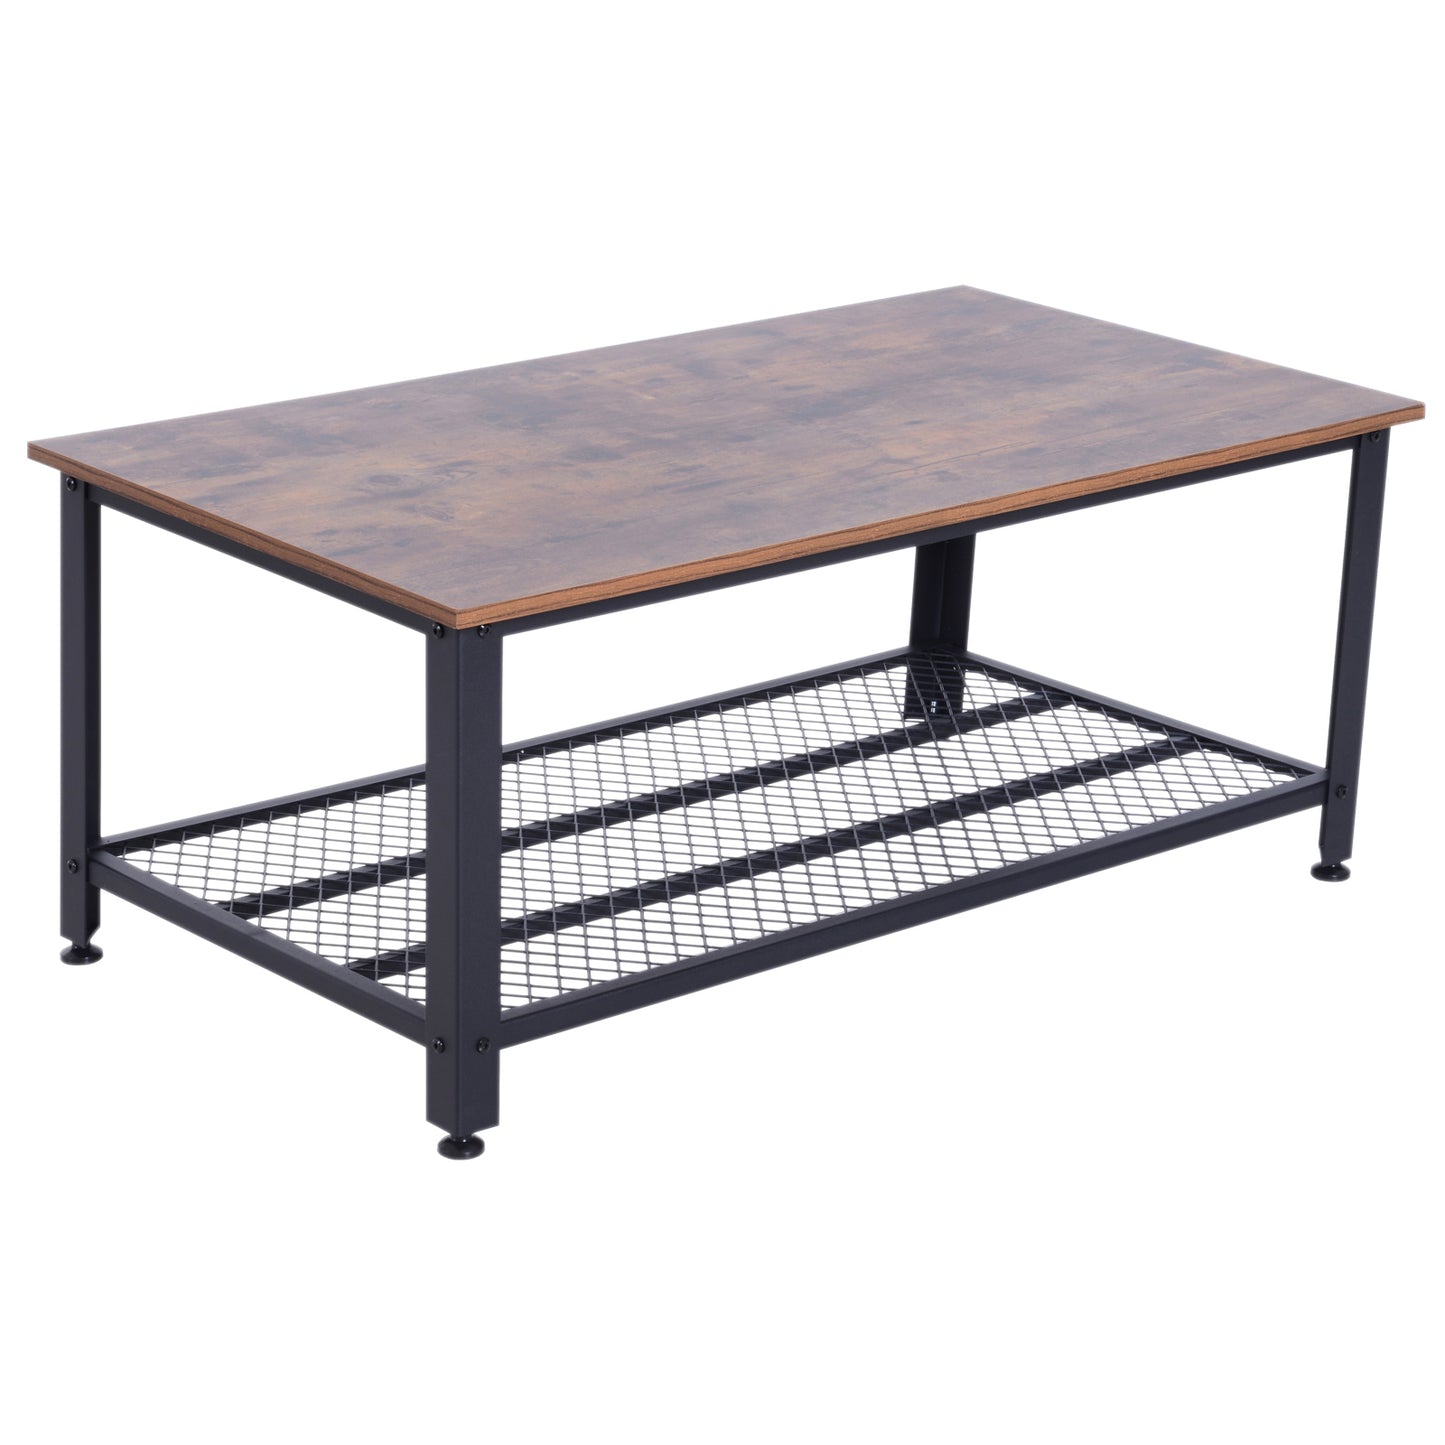 HOMCOM 2-Tier Coffee Table, 106Lx60Wx45H cm-Wood Grain/ Black Frame Colour